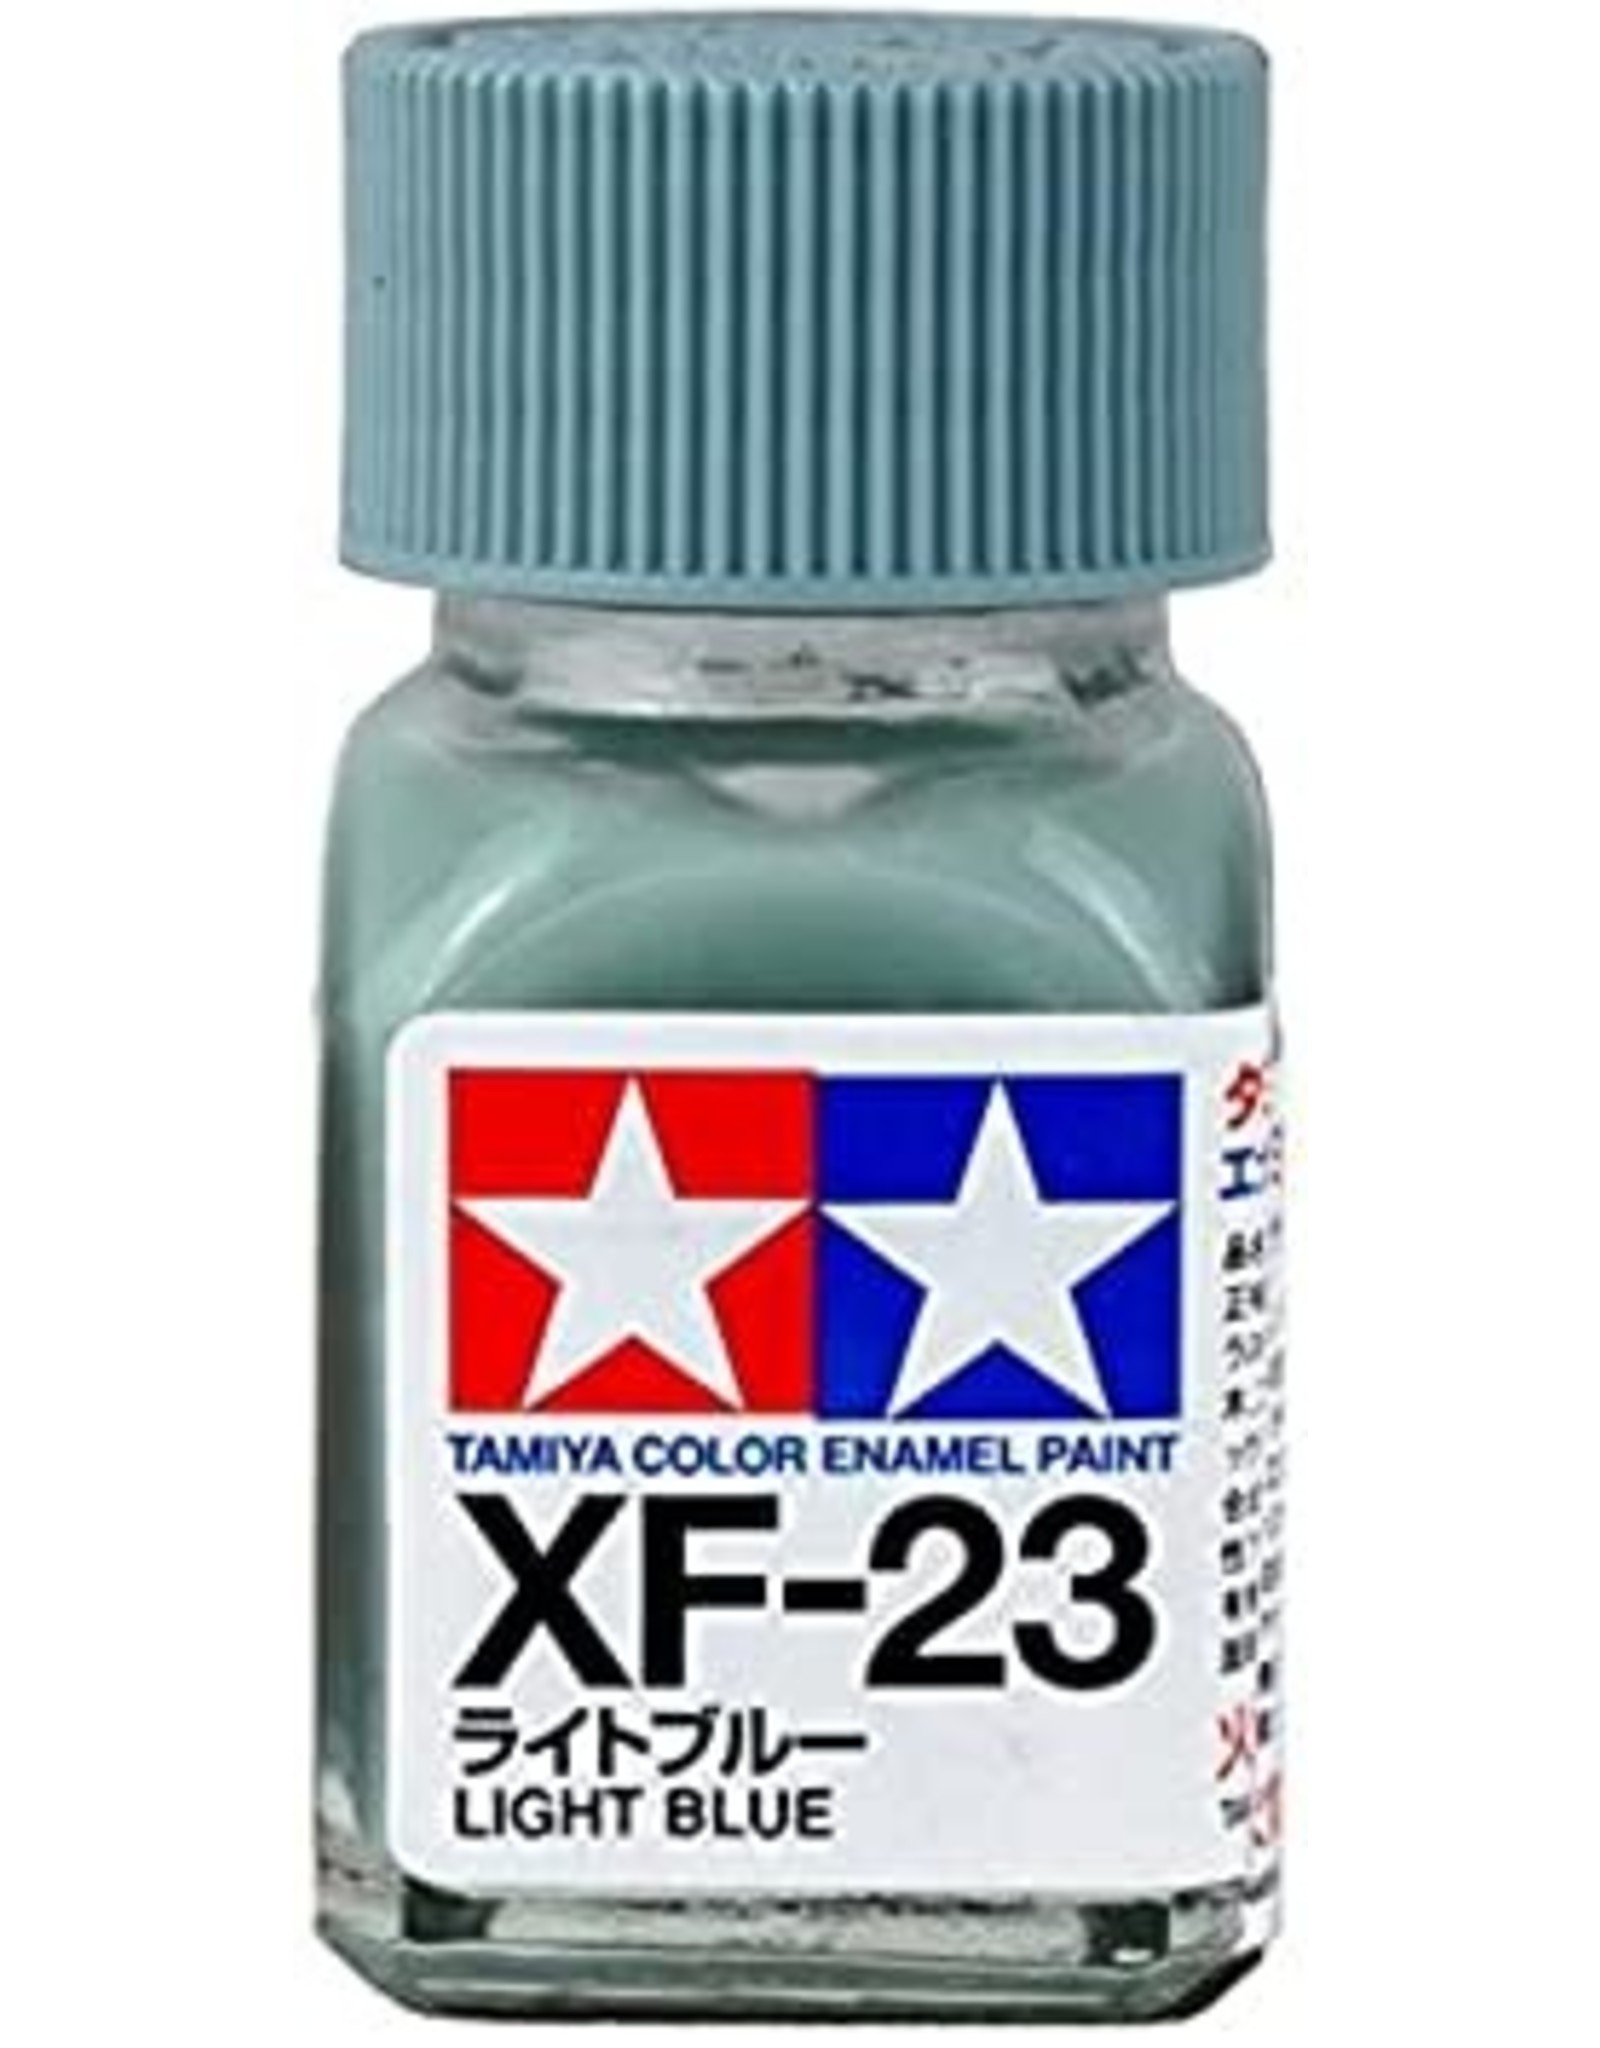 Tamiya Tamiya color enamel paint - XF-23 - Light blue